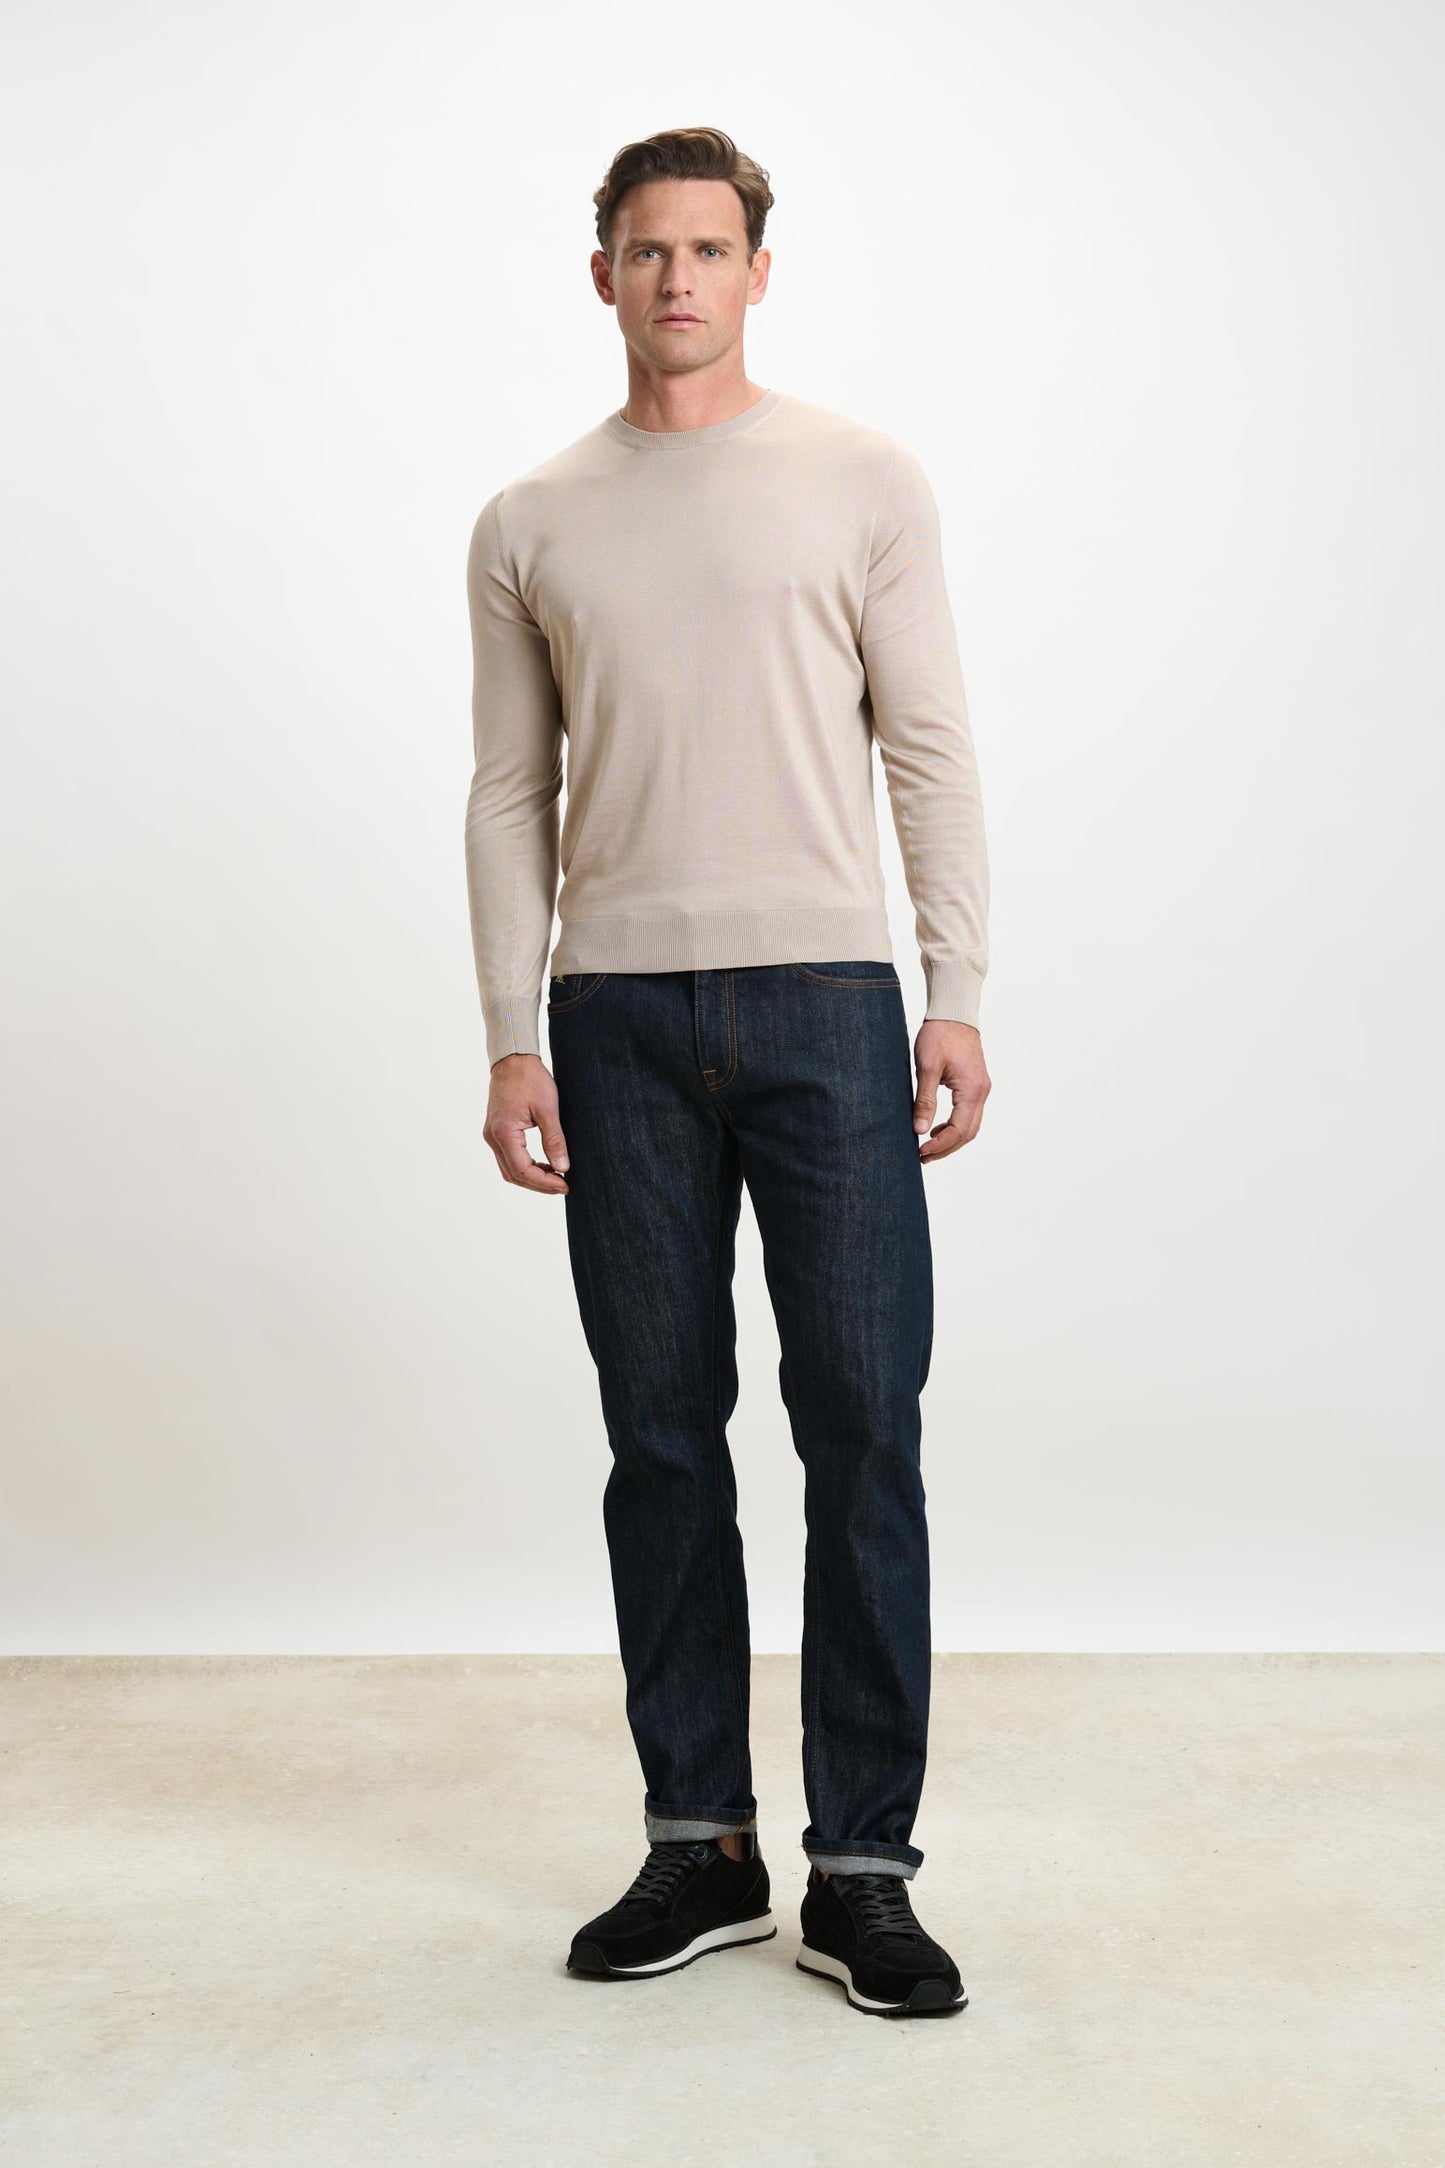 Crewe Silk Long Sleeve Sweater Beige